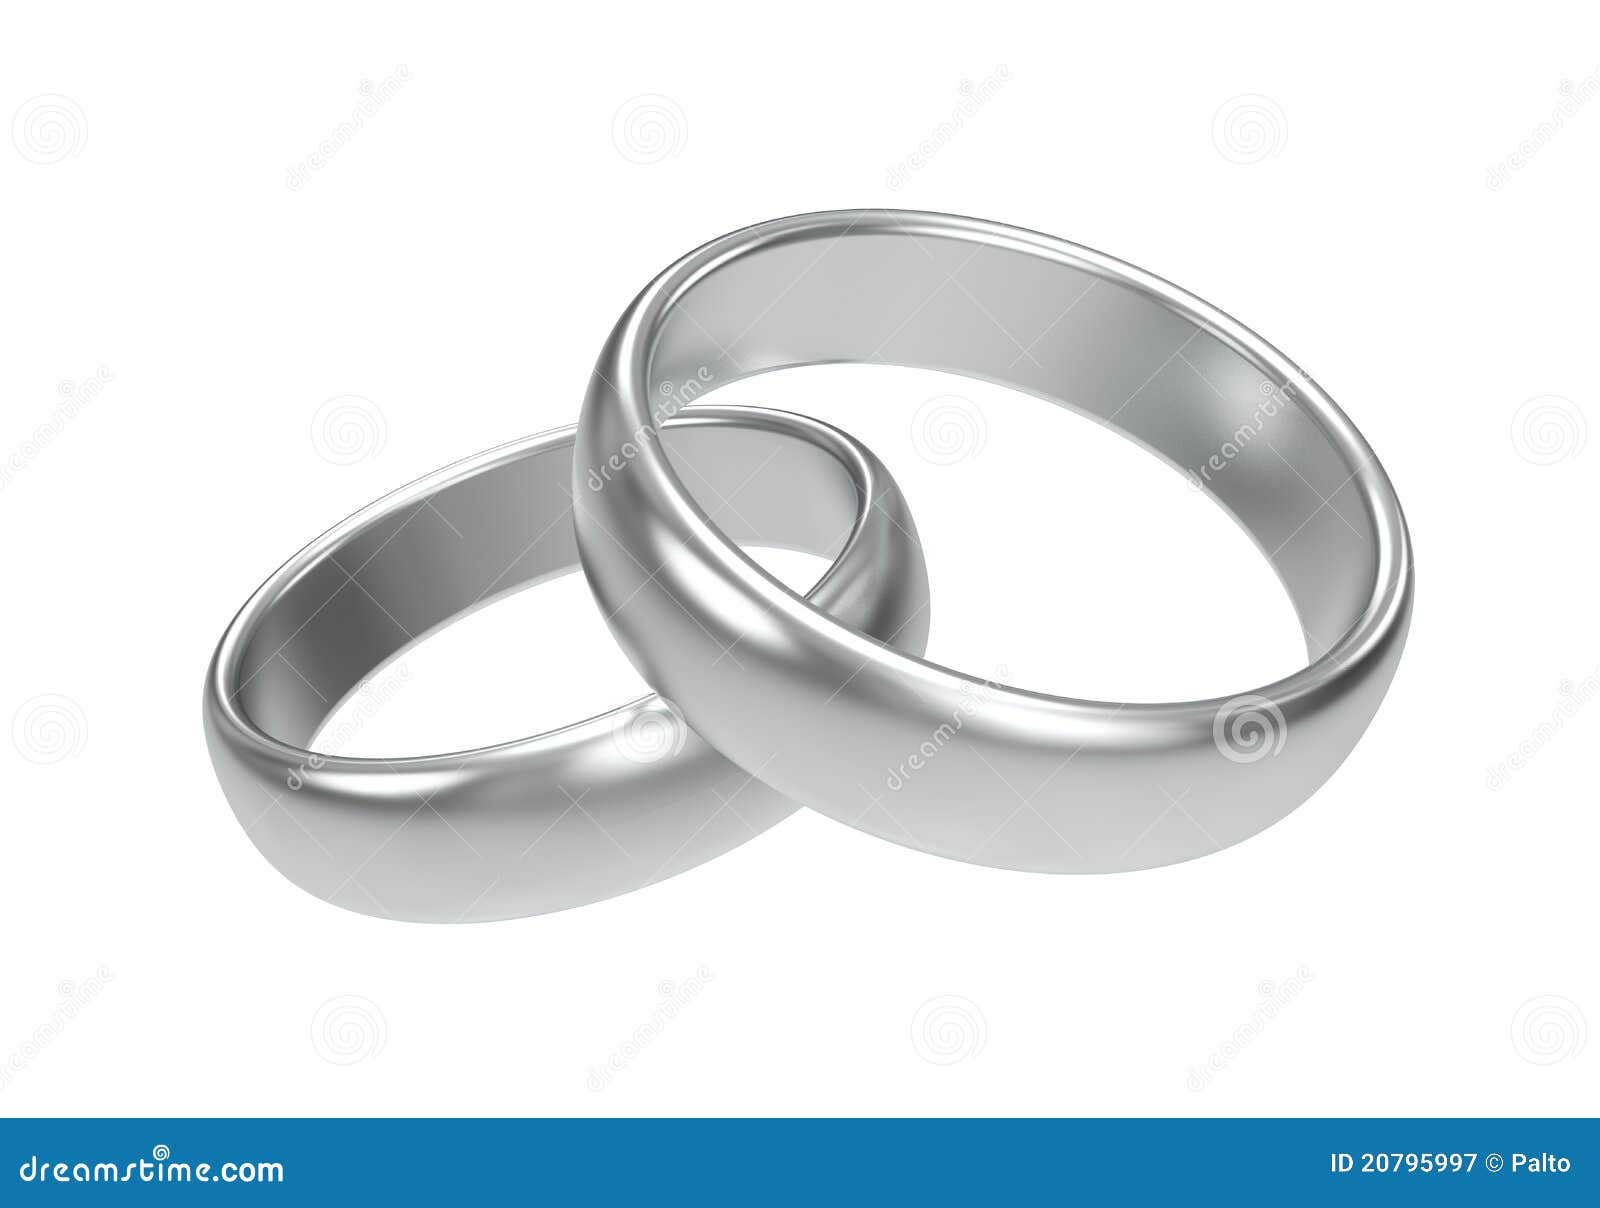  Silver  wedding  rings  stock illustration Illustration of 